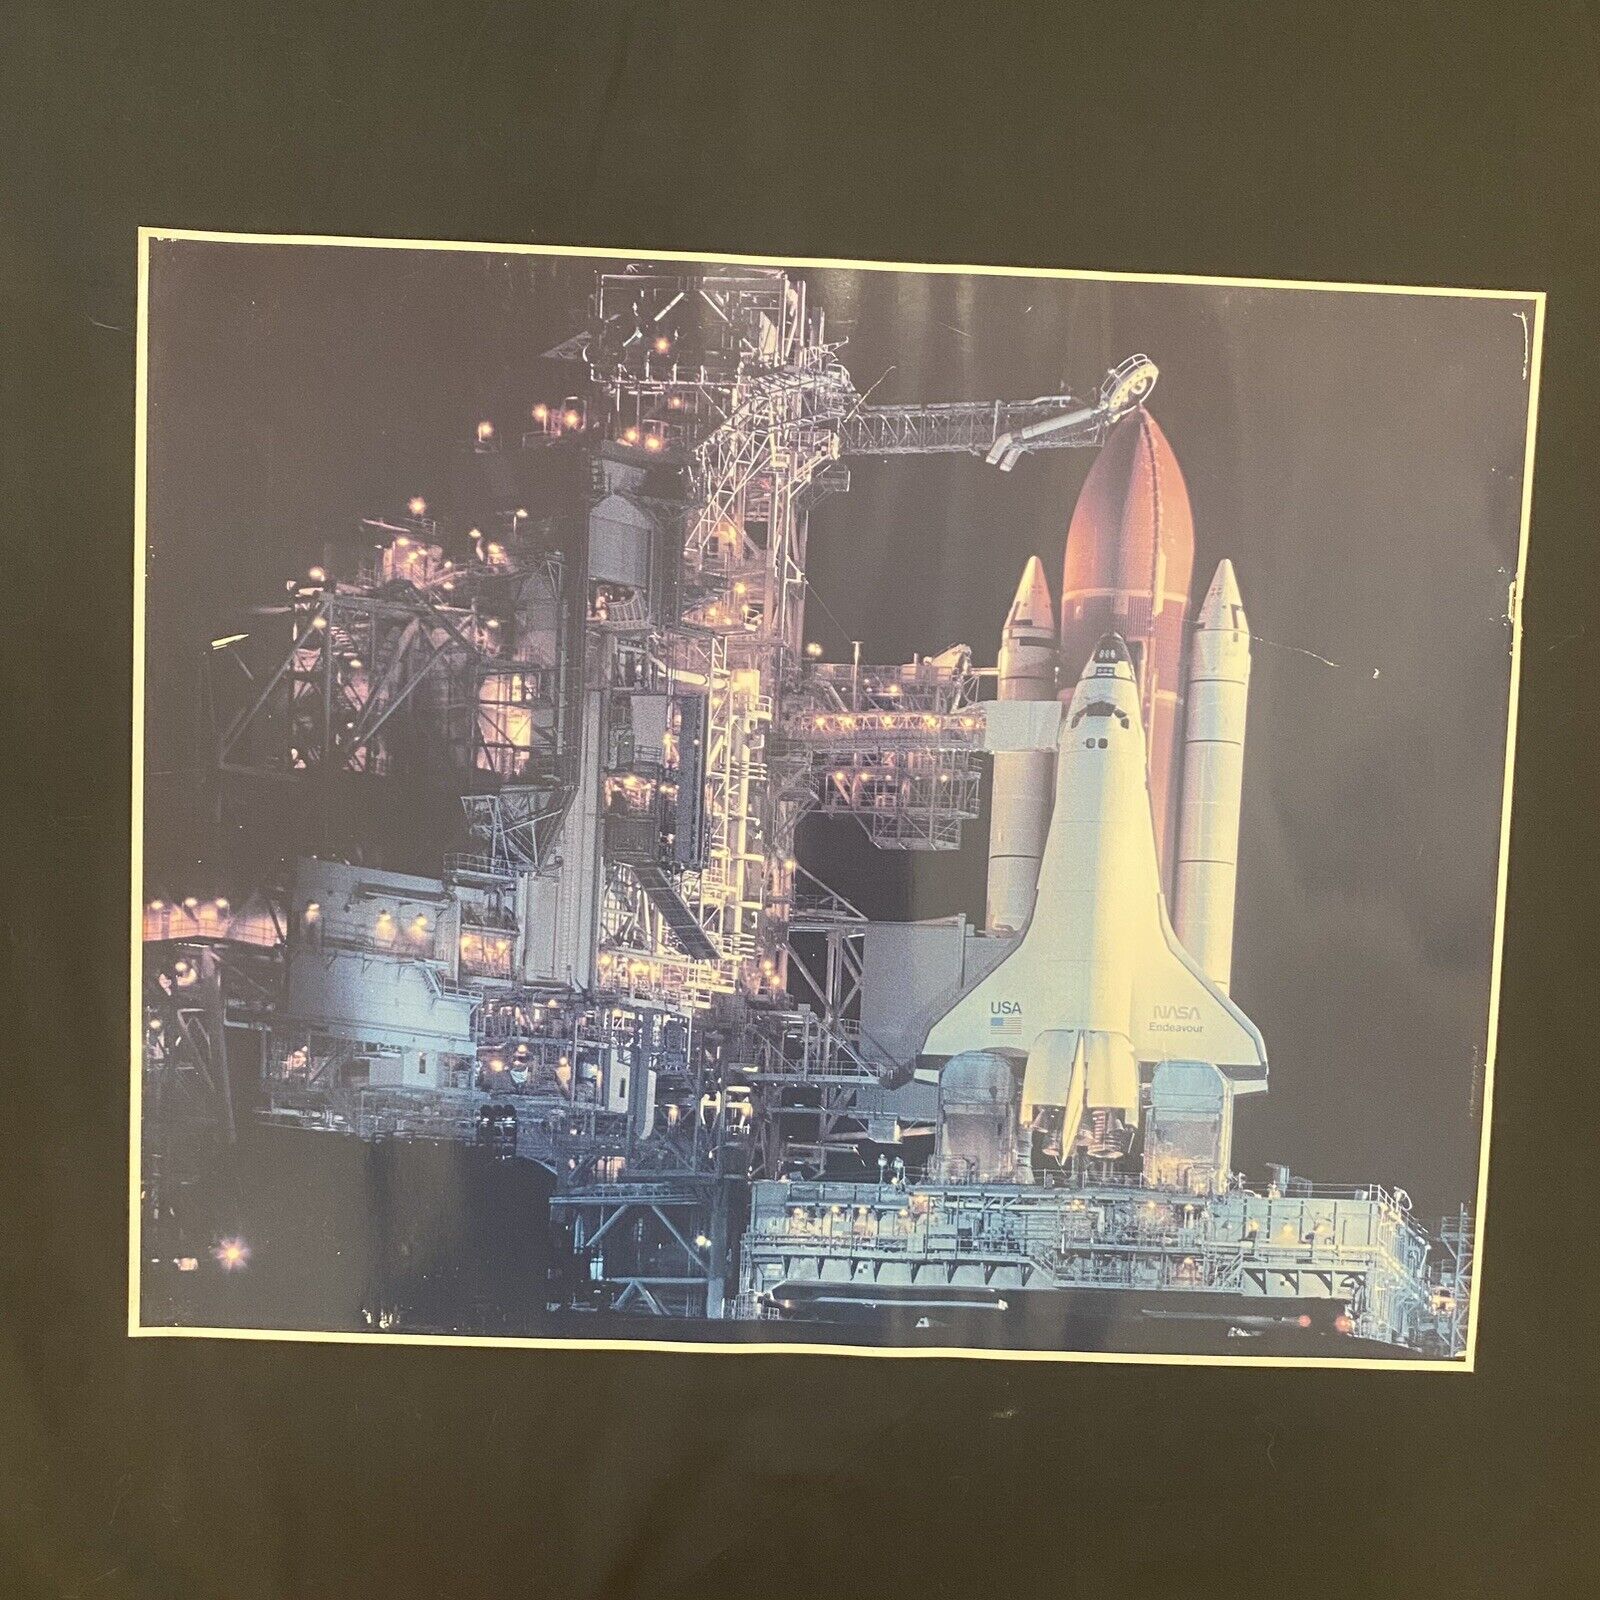 Vintage NASA Endeavor Skylab Space Shuttle Astronaut Launch Engineer Photo 20x16